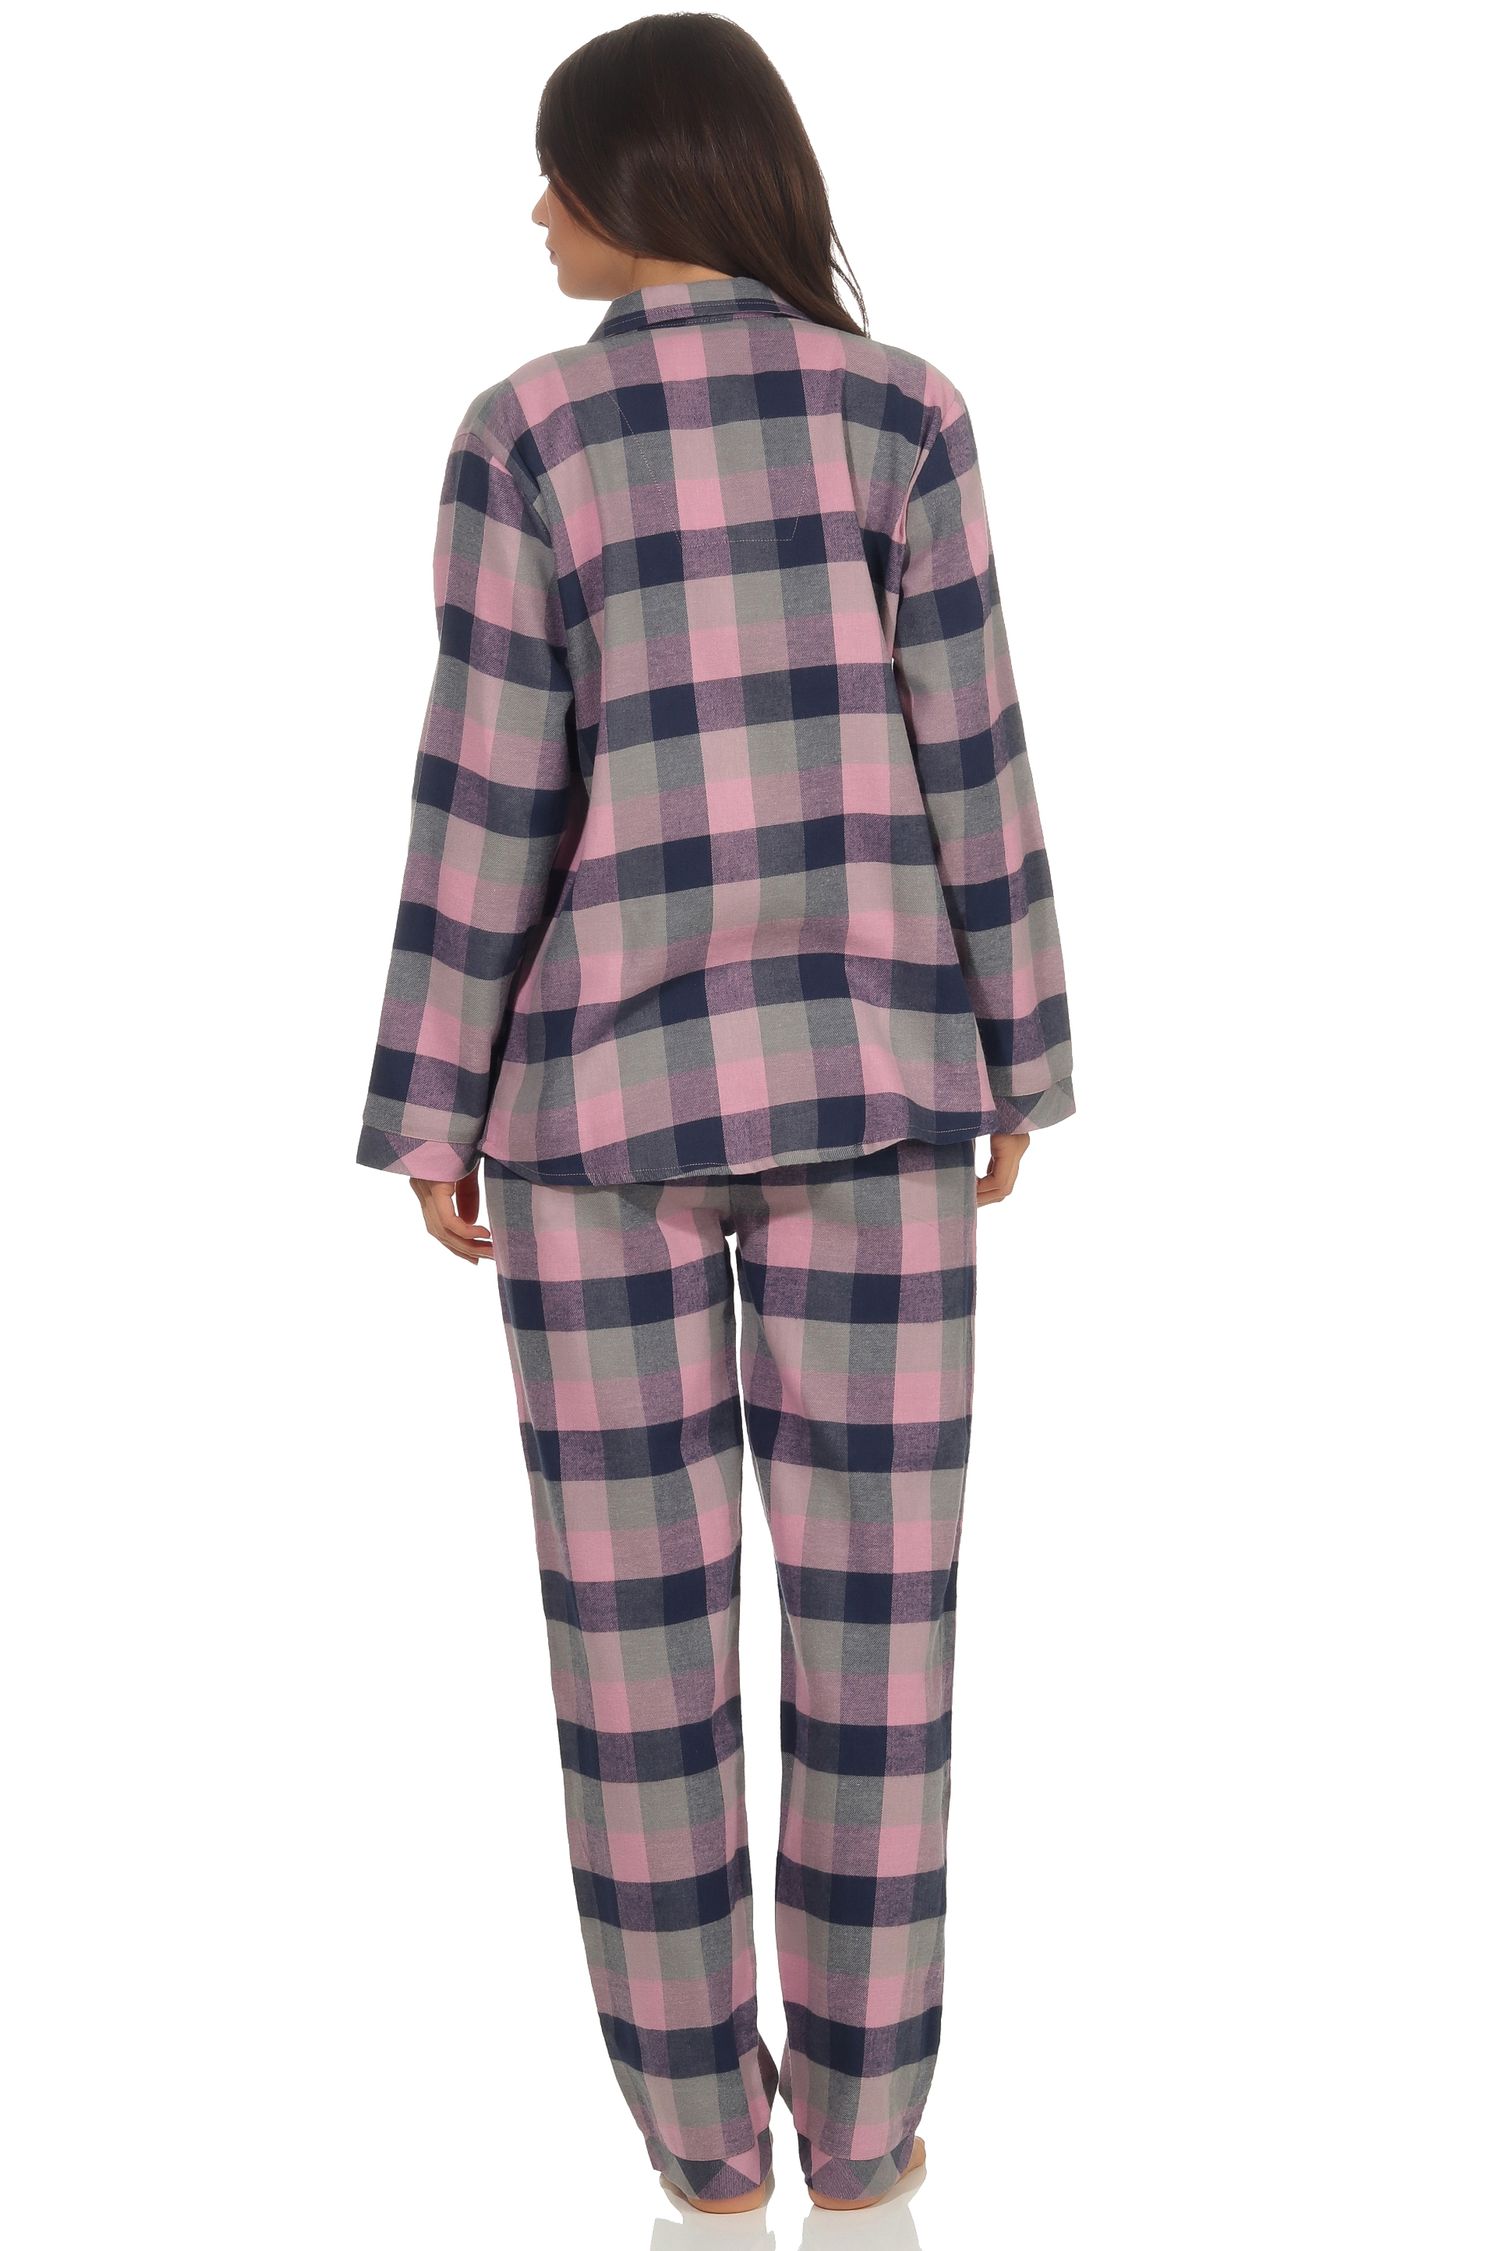 Damen langarm Flanell Pyjama Schlafanzug kariert - 291 201 15 554